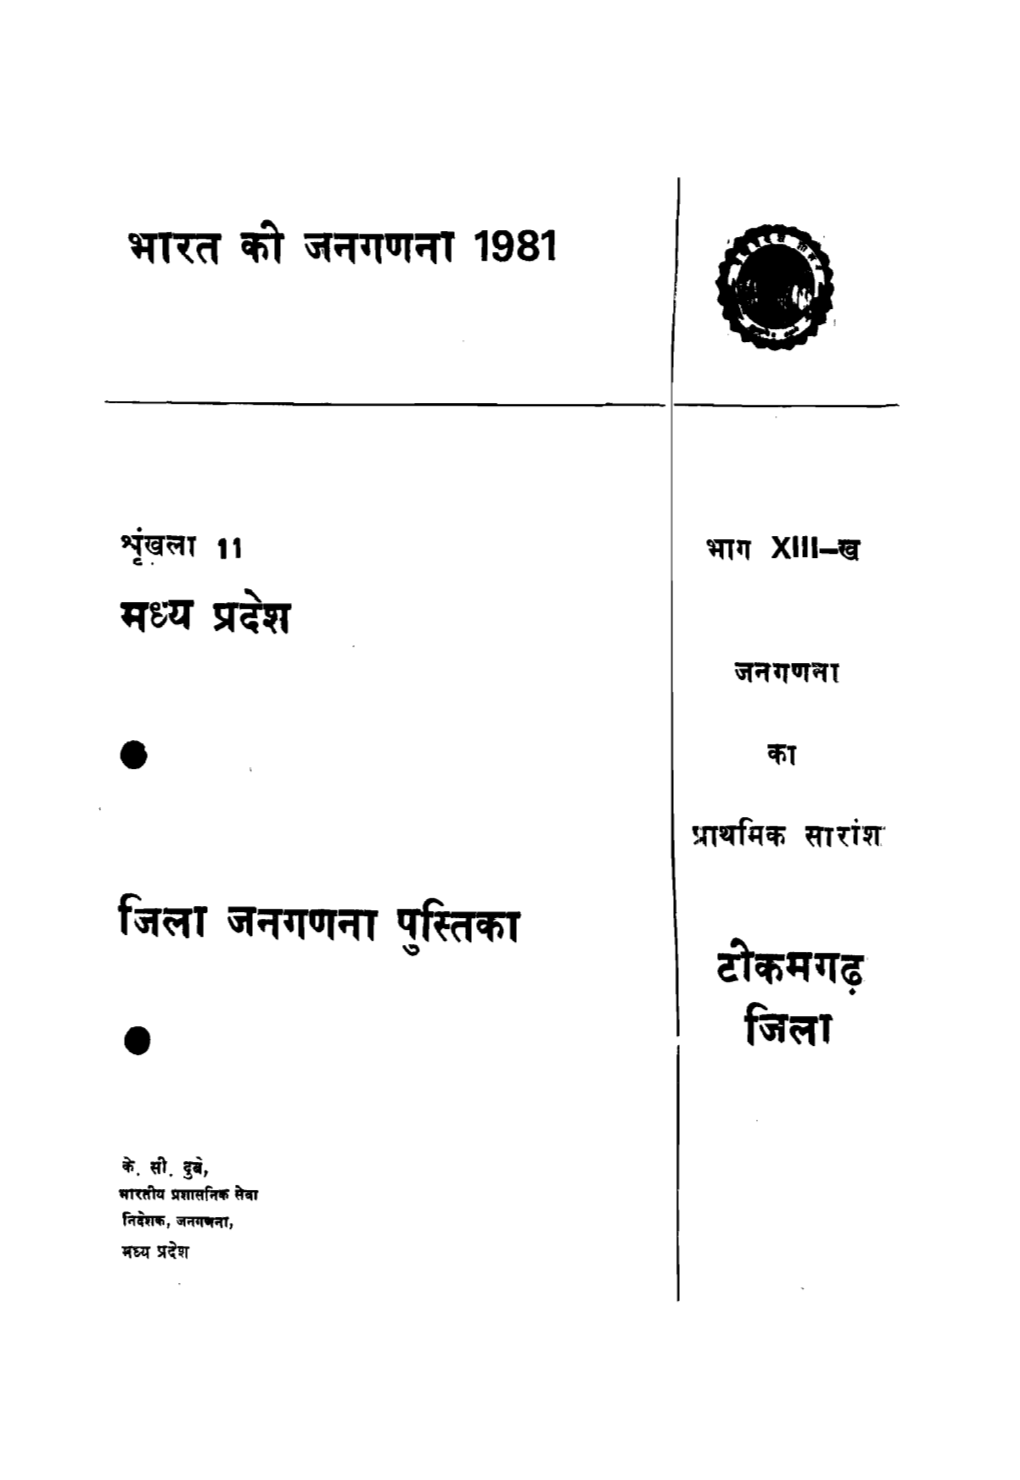 District Census Handbook, Tikamgarh, Part XIII-B, Series-11